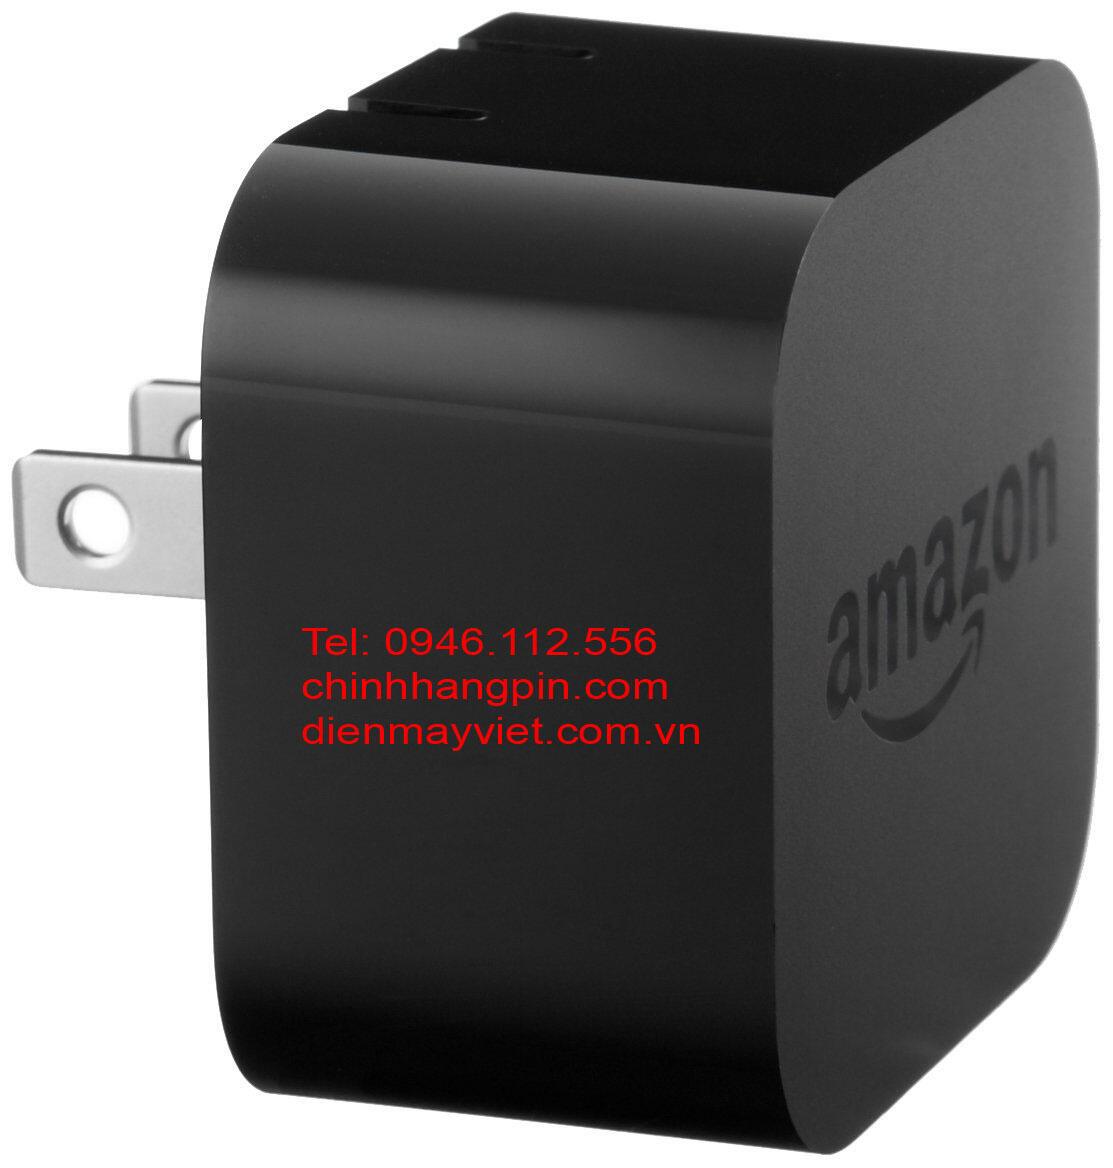 Sạc (adapter) Amazon Kindle 9W 1.8A USB chính hãng, full box